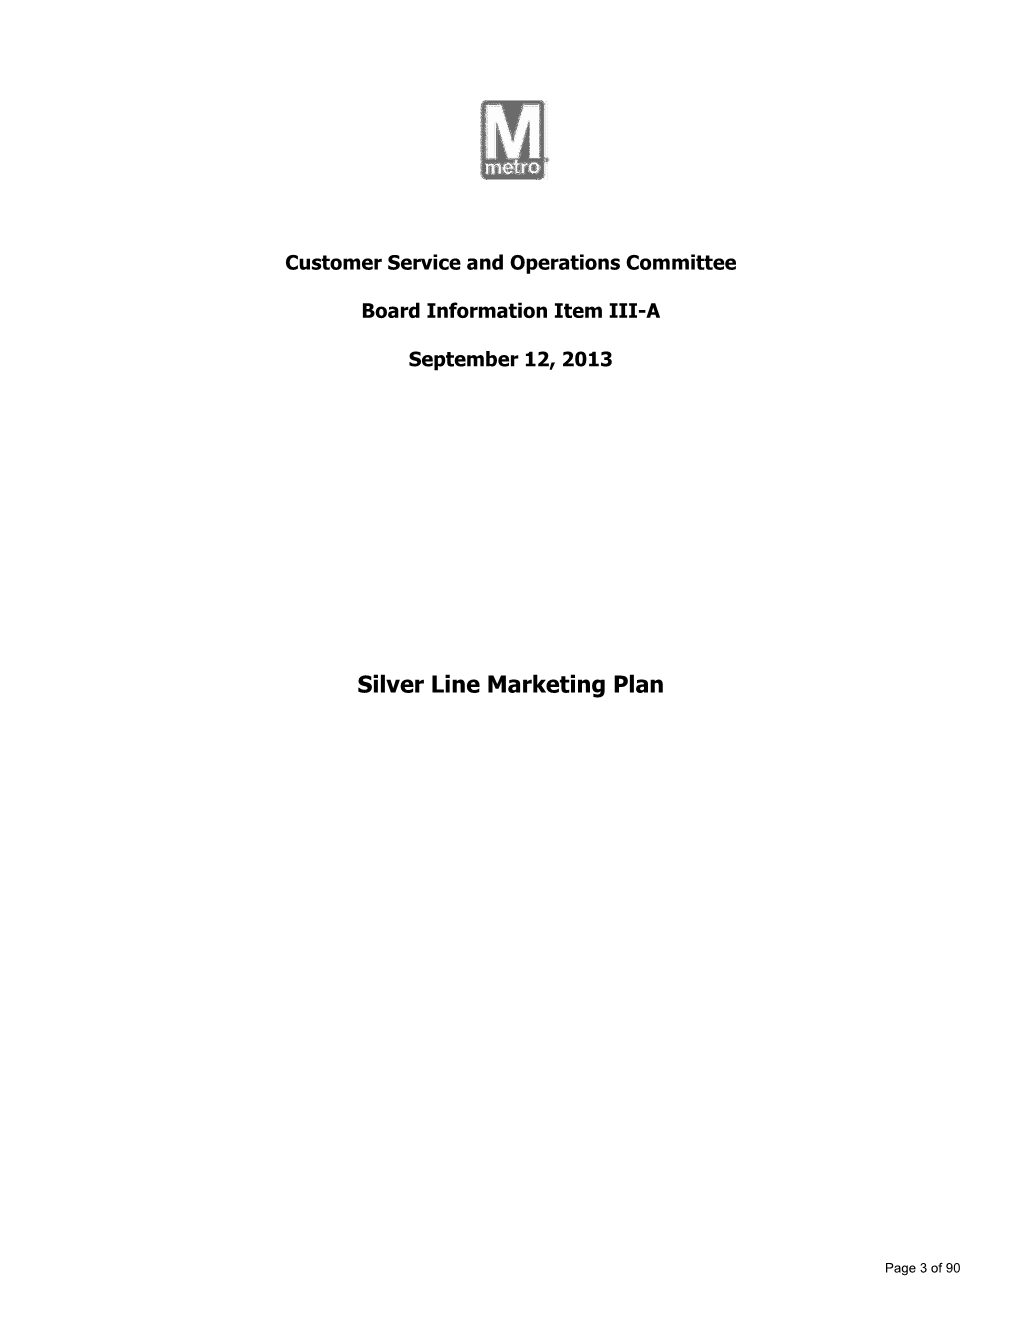 Silver Line Marketing Plan